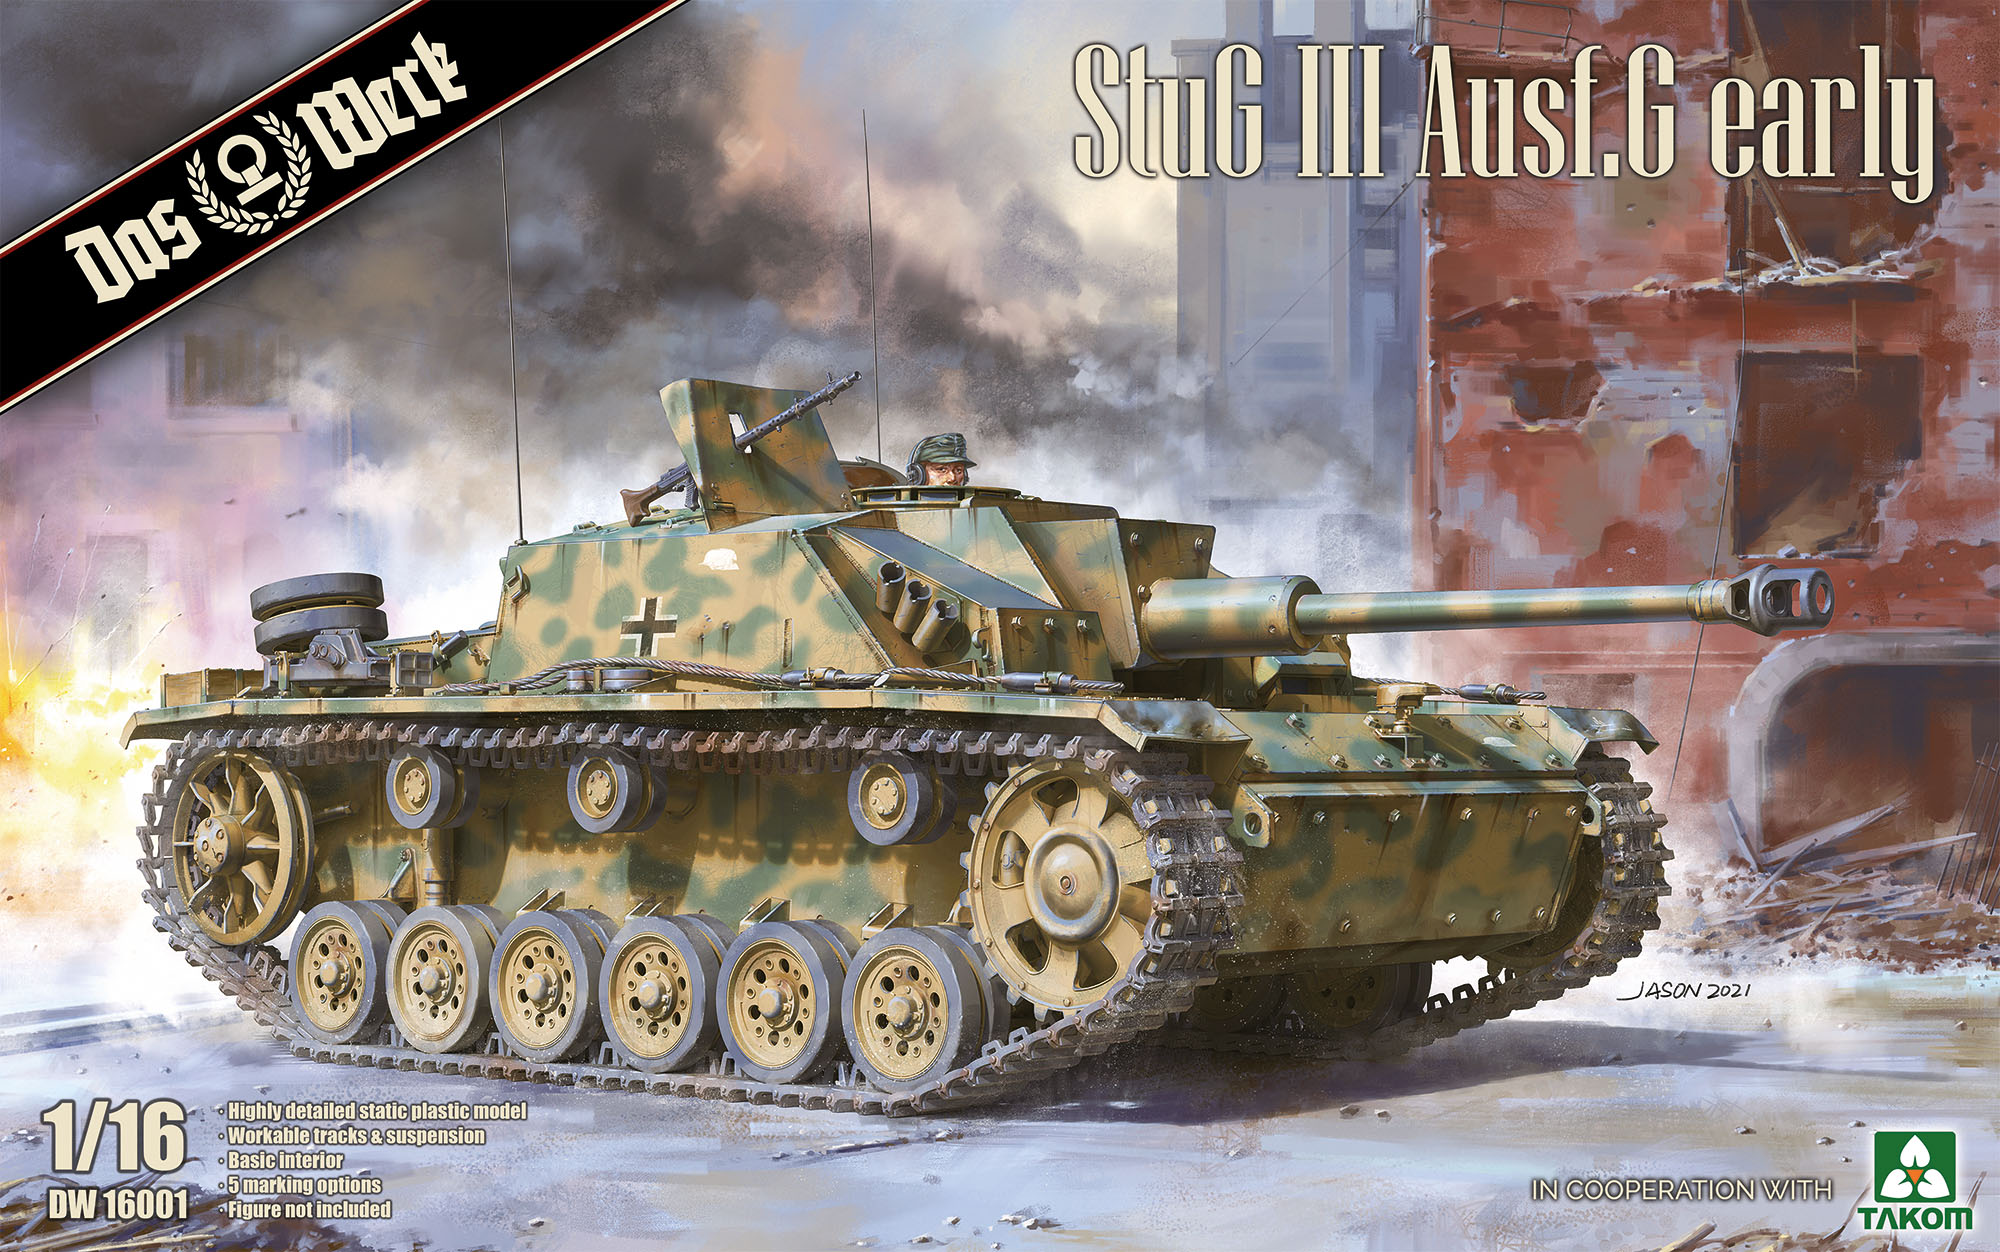 DW16001 StuG III Ausf. G early